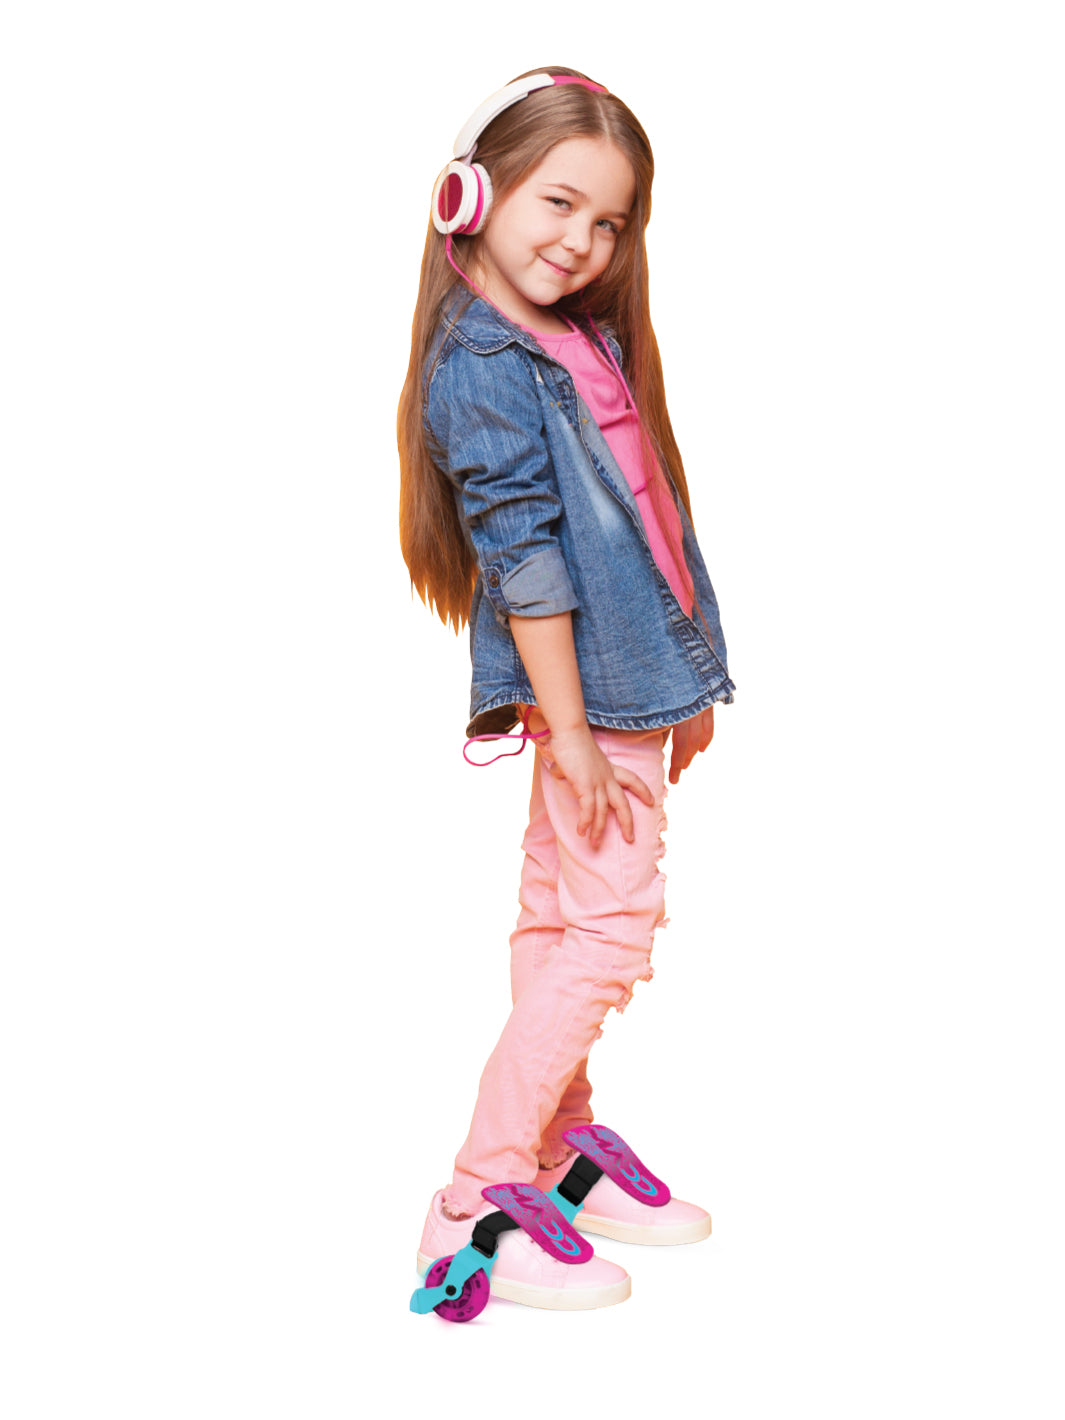 Madd Gear Light-Up Heel Skates Rollers Kids Boys Girls Skates Pink Blue